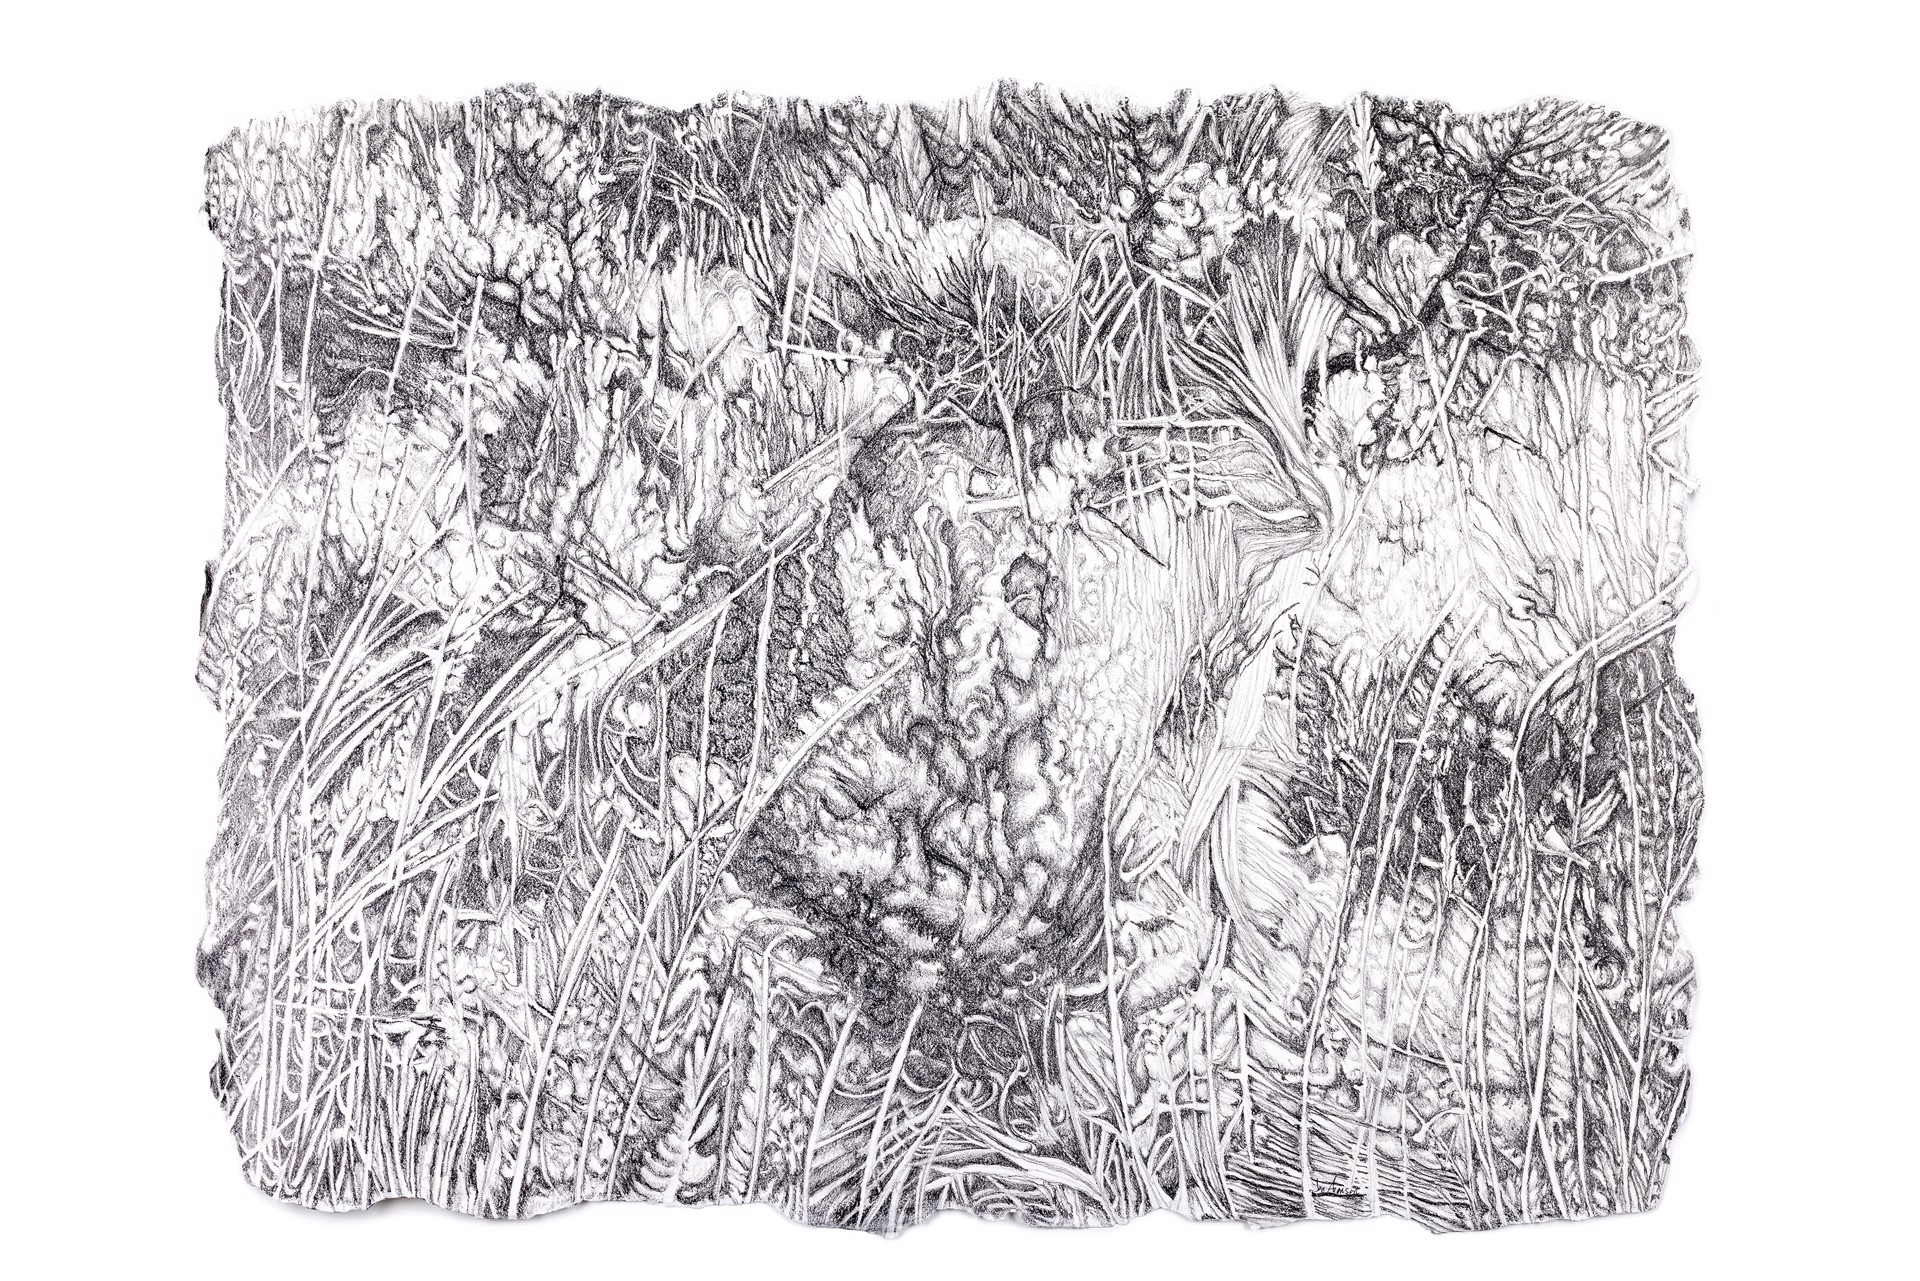 Sagebrush #4 by Jan Aronson